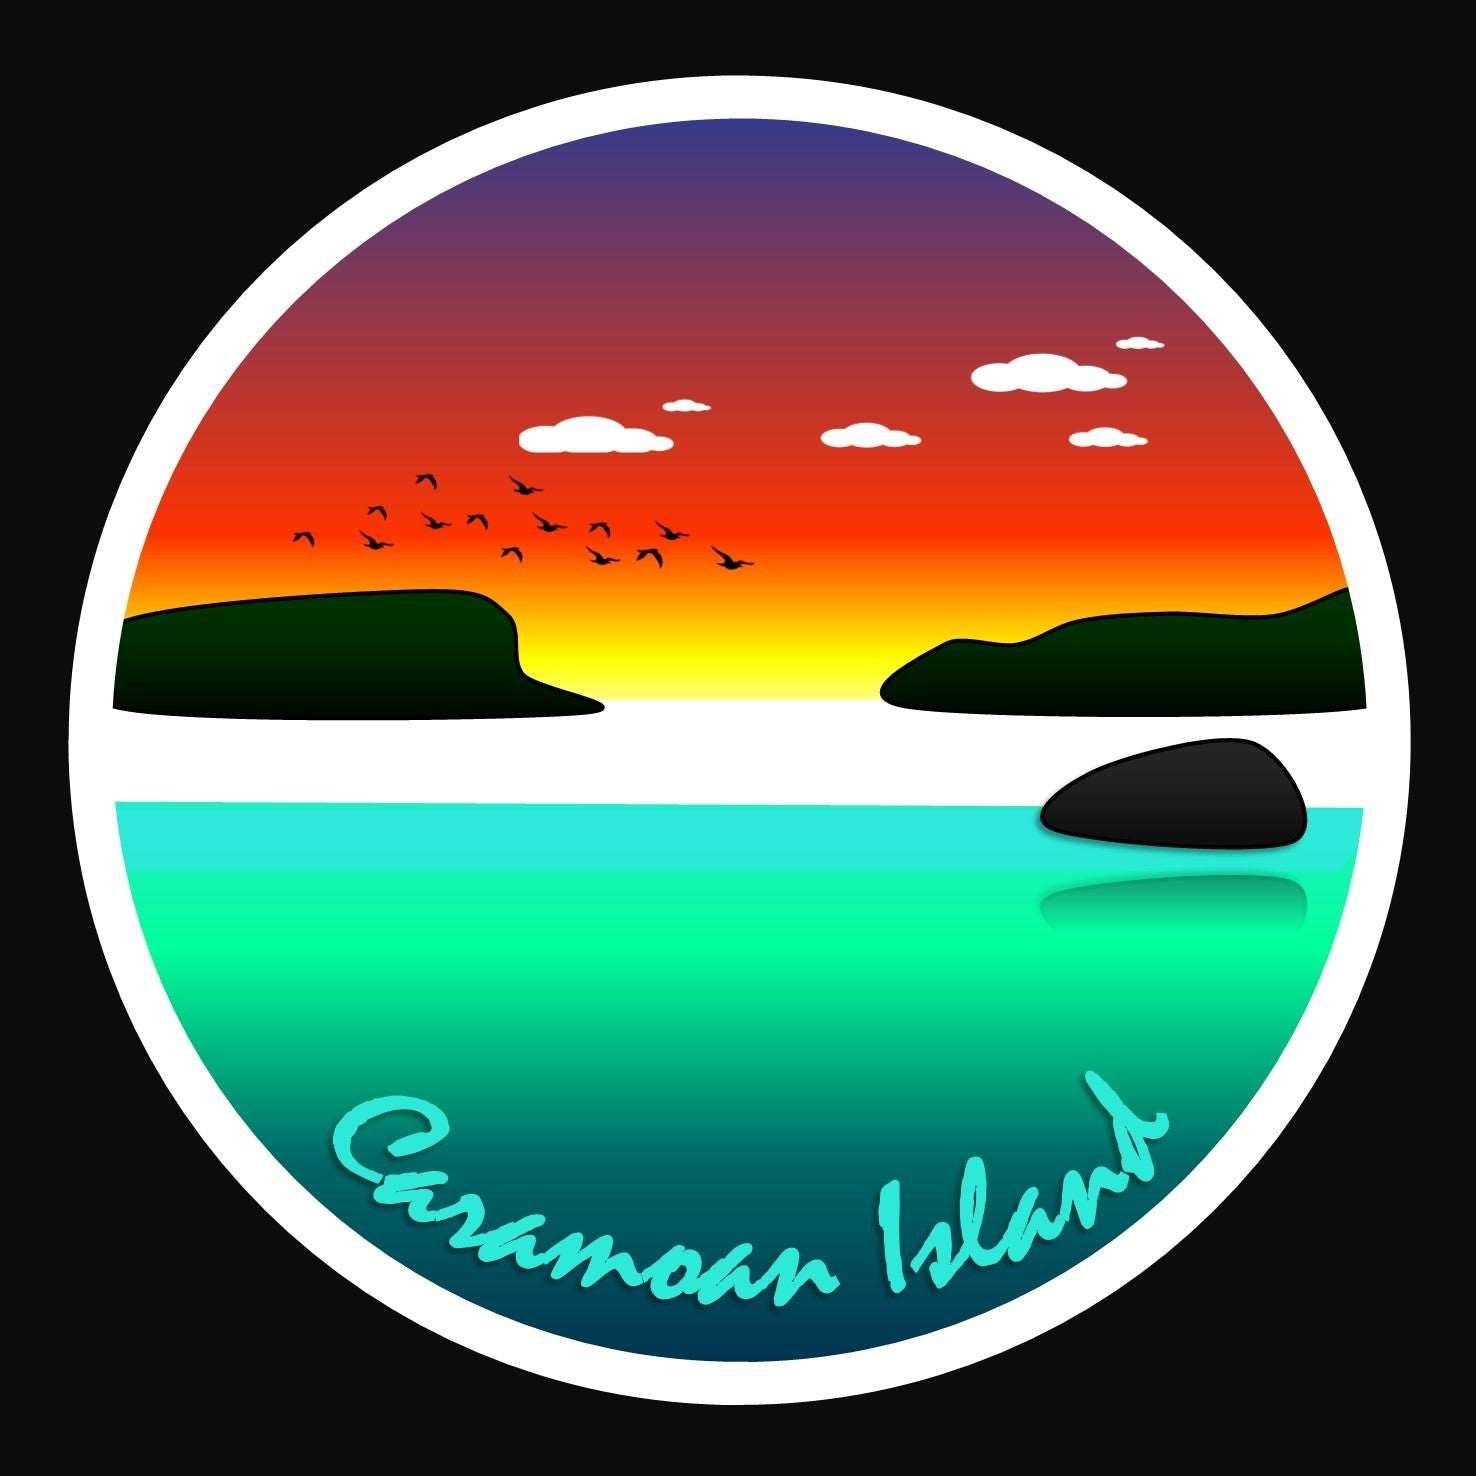 Caramoan Island